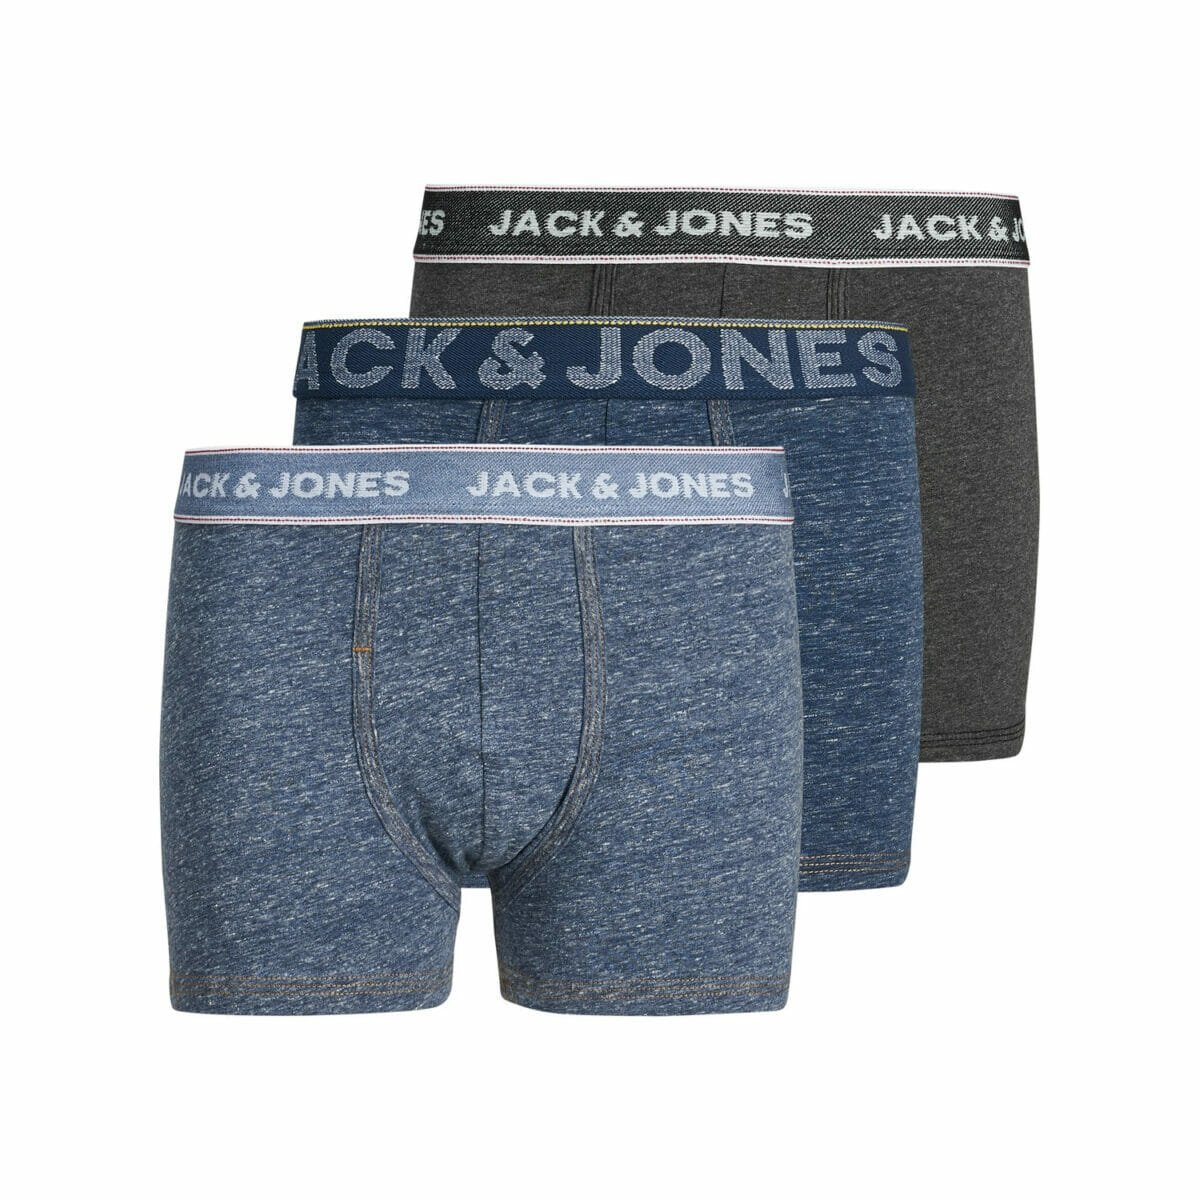 JACK & JONES JACDENIM boxerit 3kpl, Navy Blazer/Dark Grey